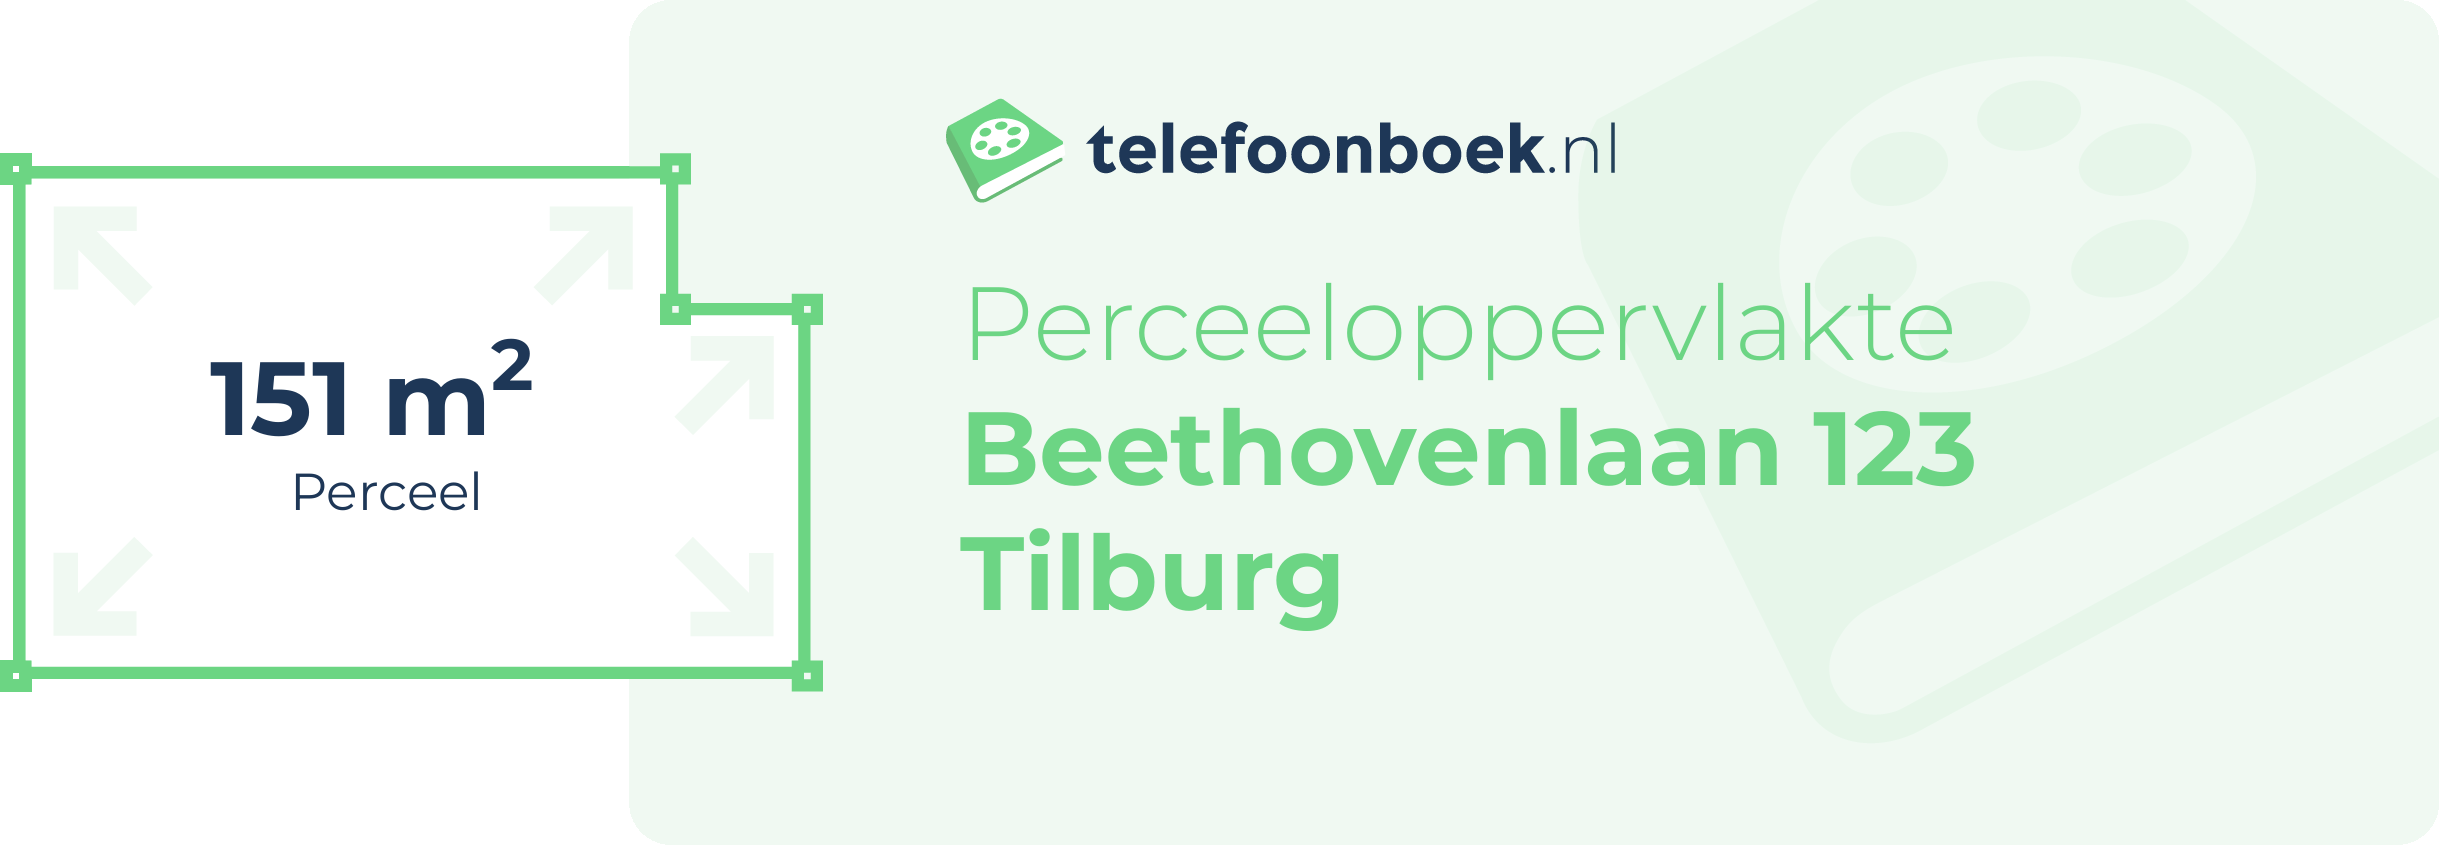 Perceeloppervlakte Beethovenlaan 123 Tilburg